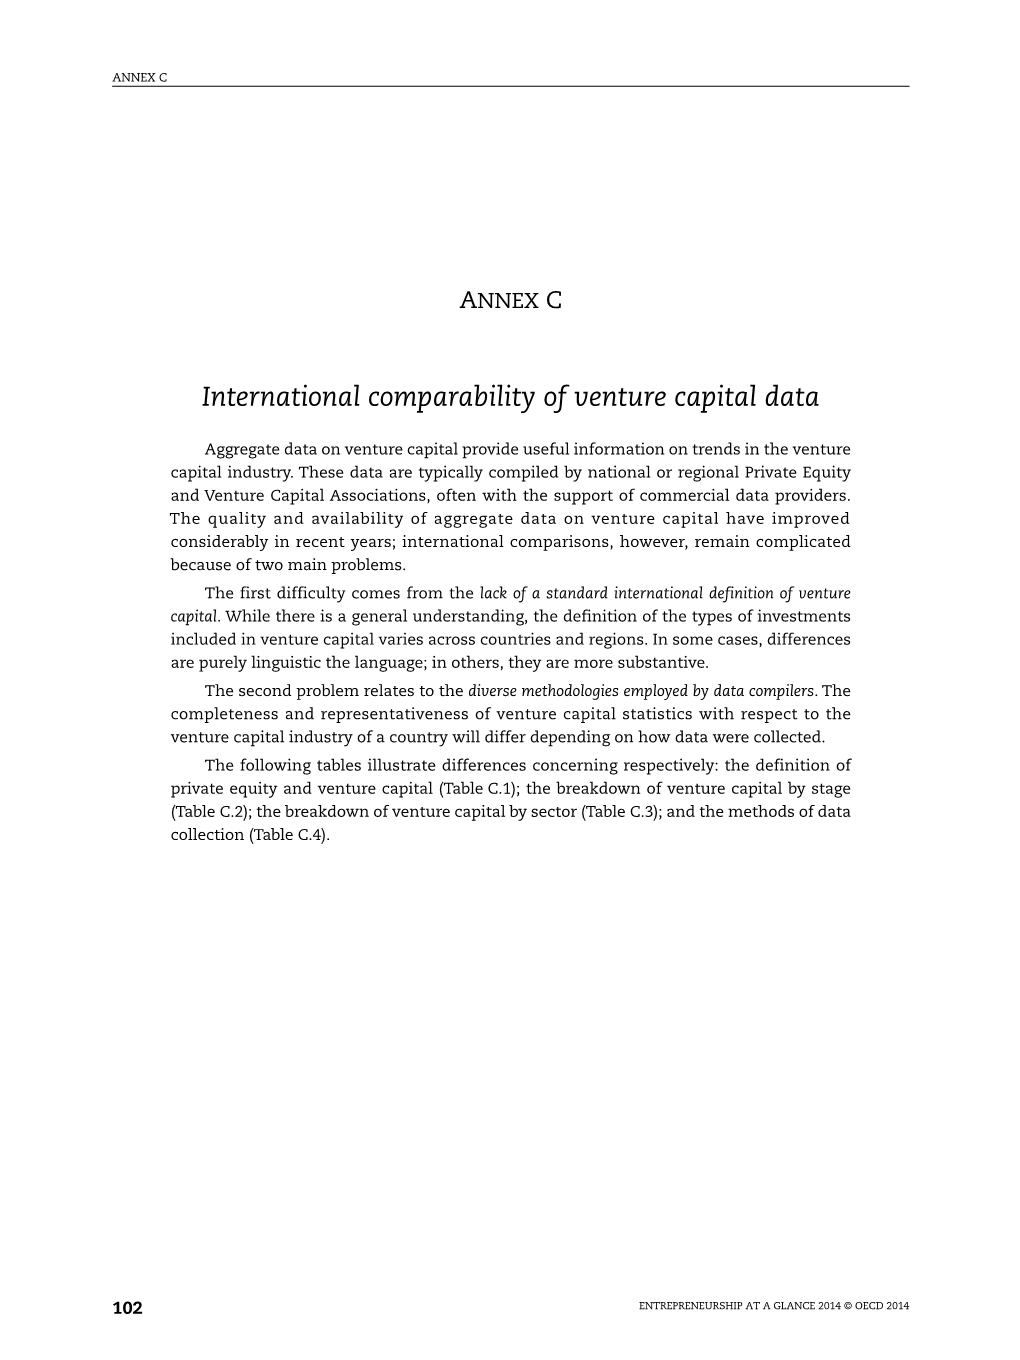 International Comparability of Venture Capital Data